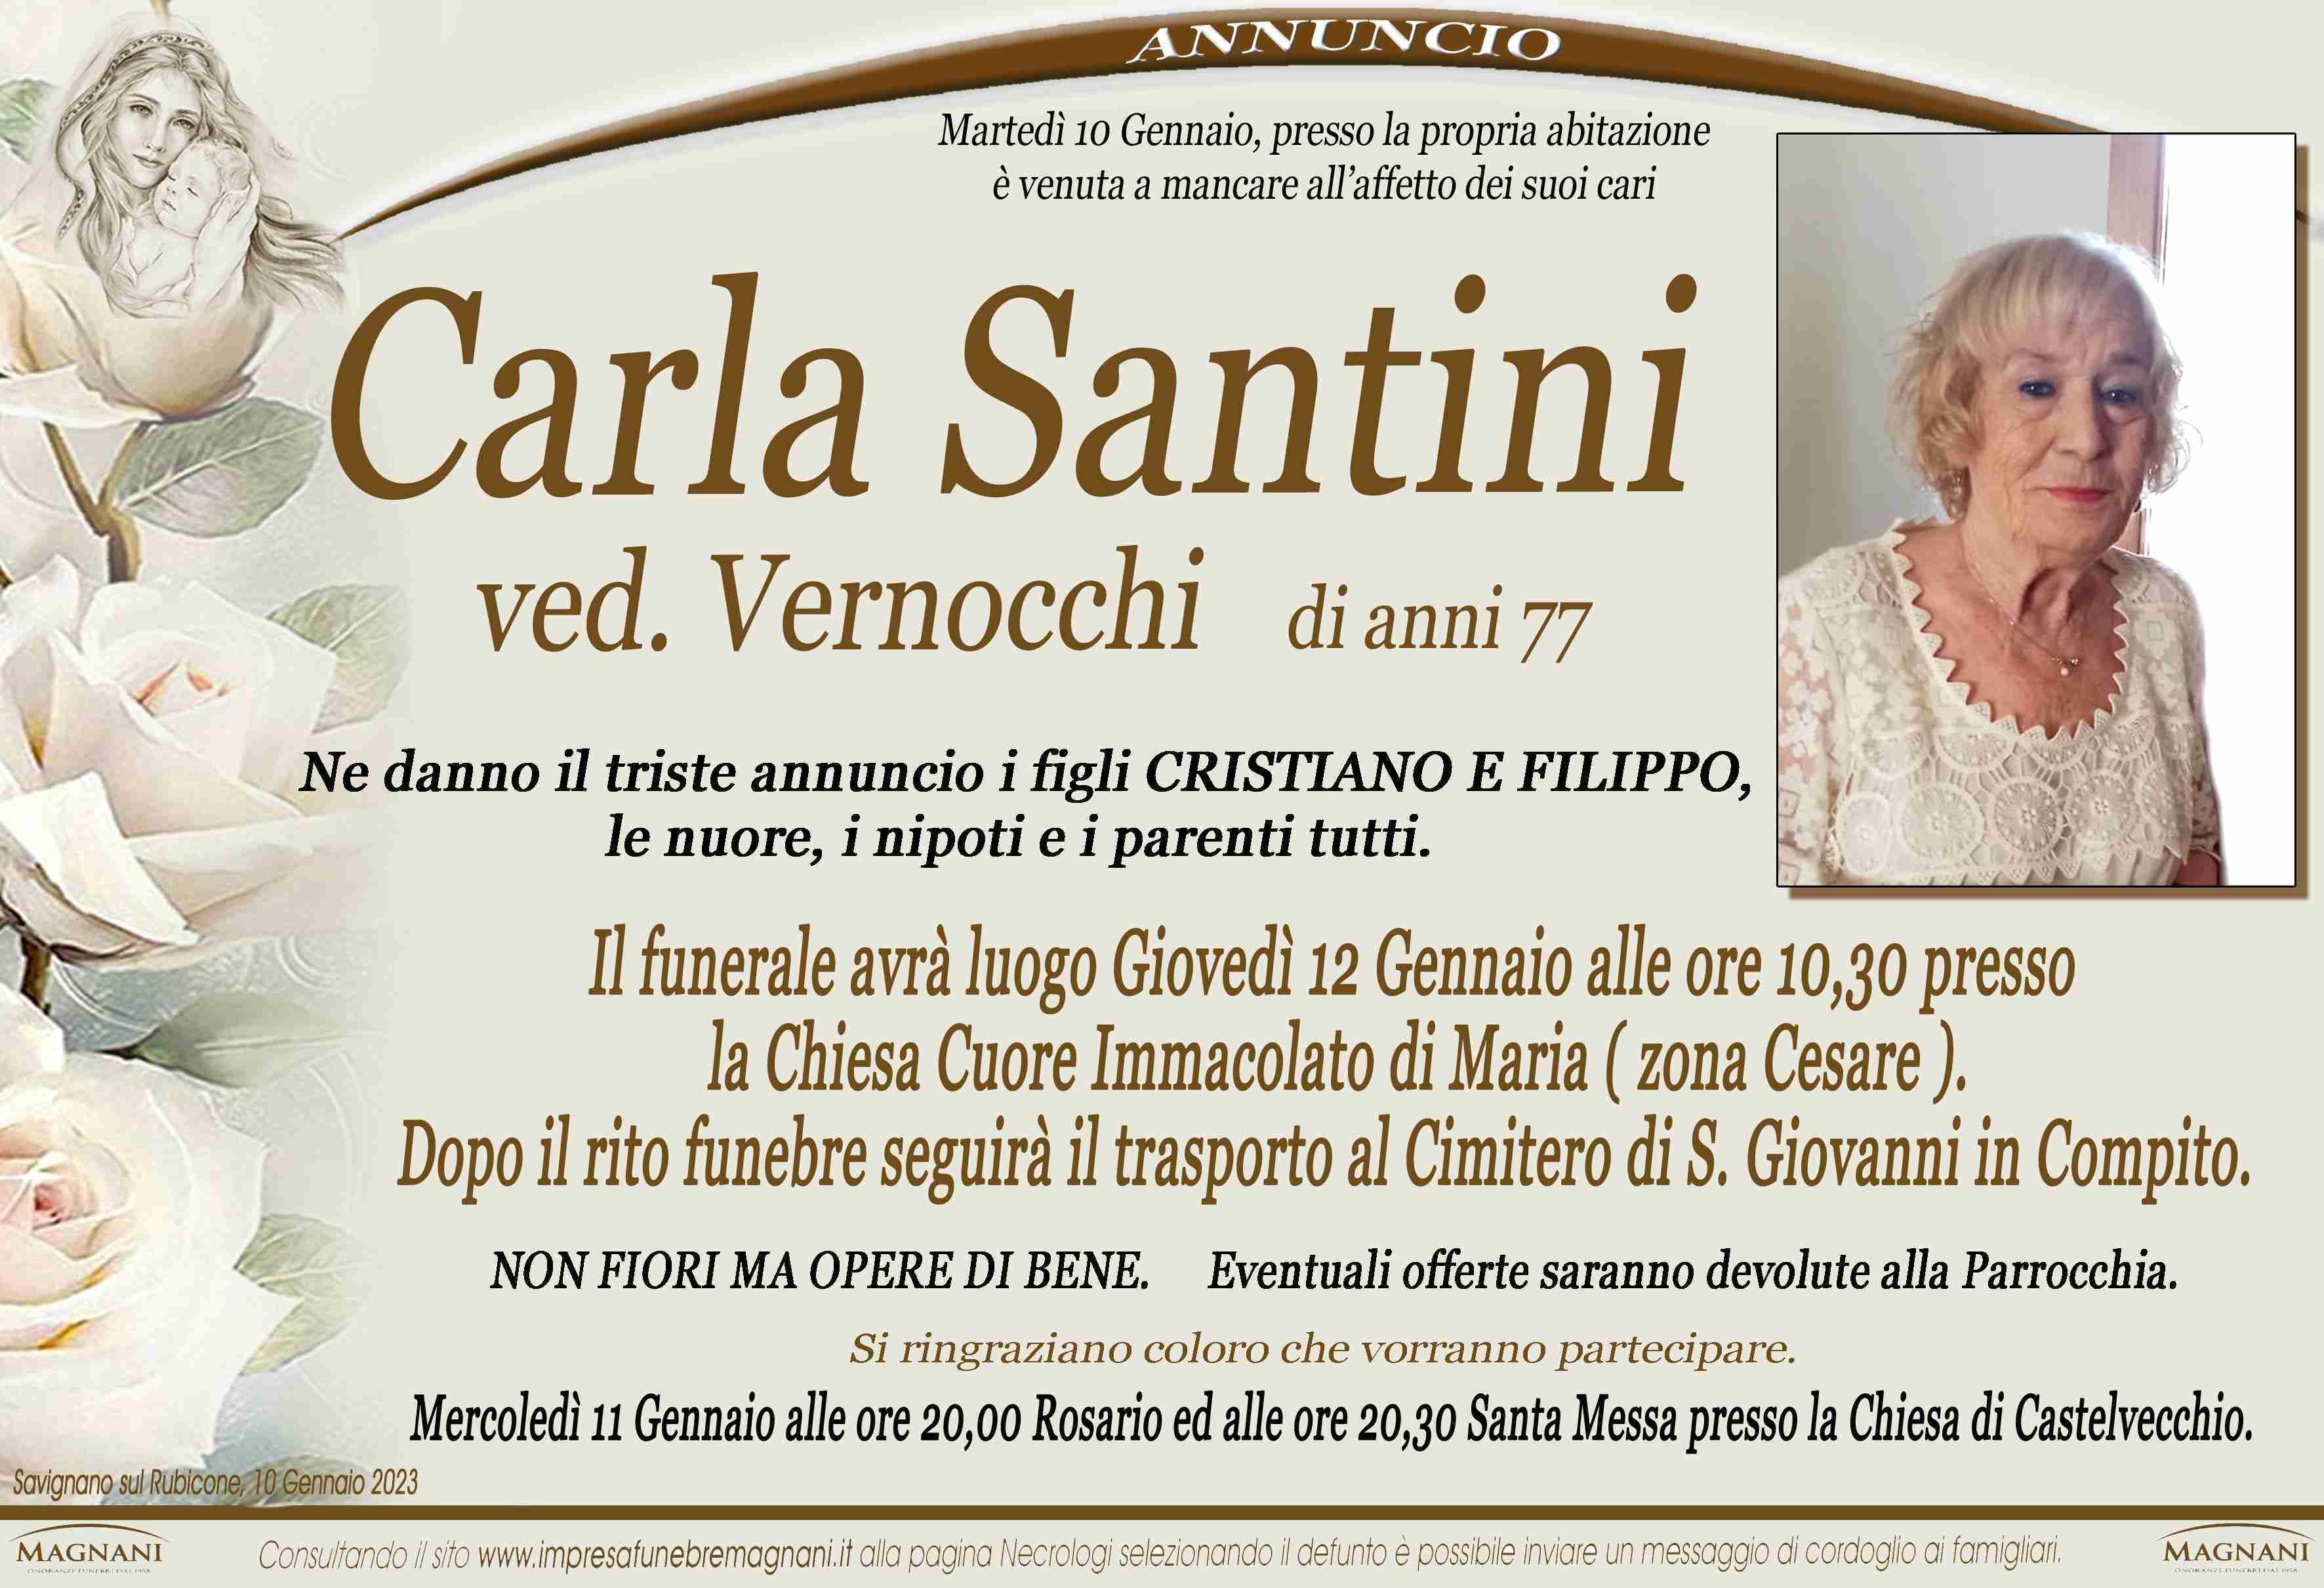 Carla Santini